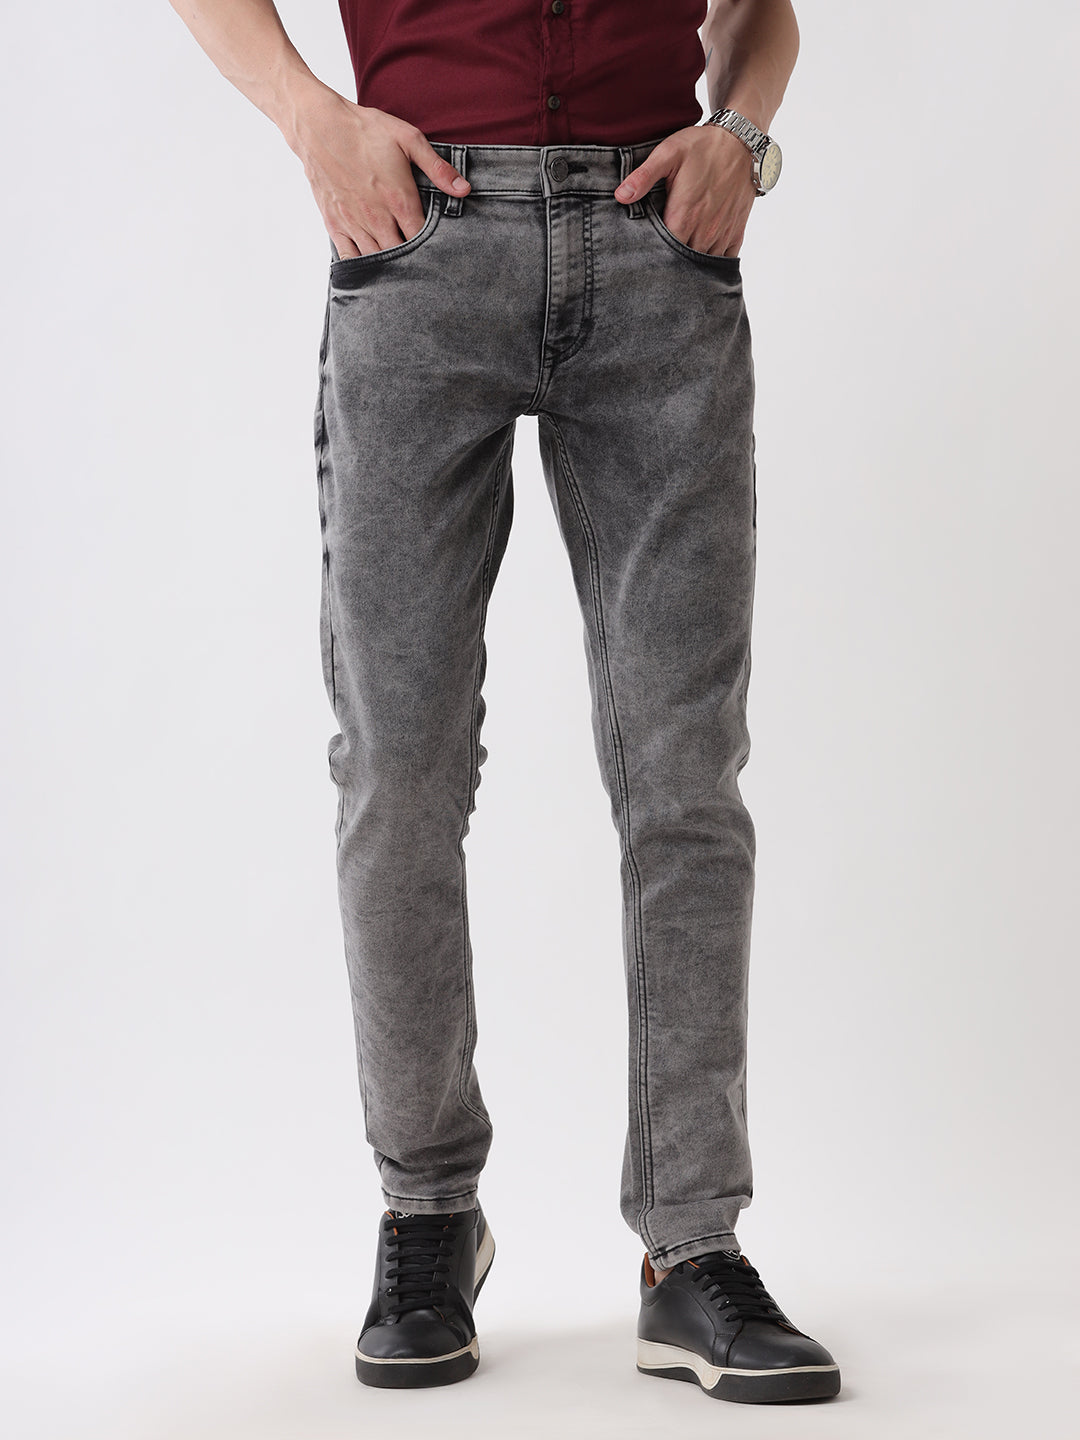 Grey Mist Denim Jeans